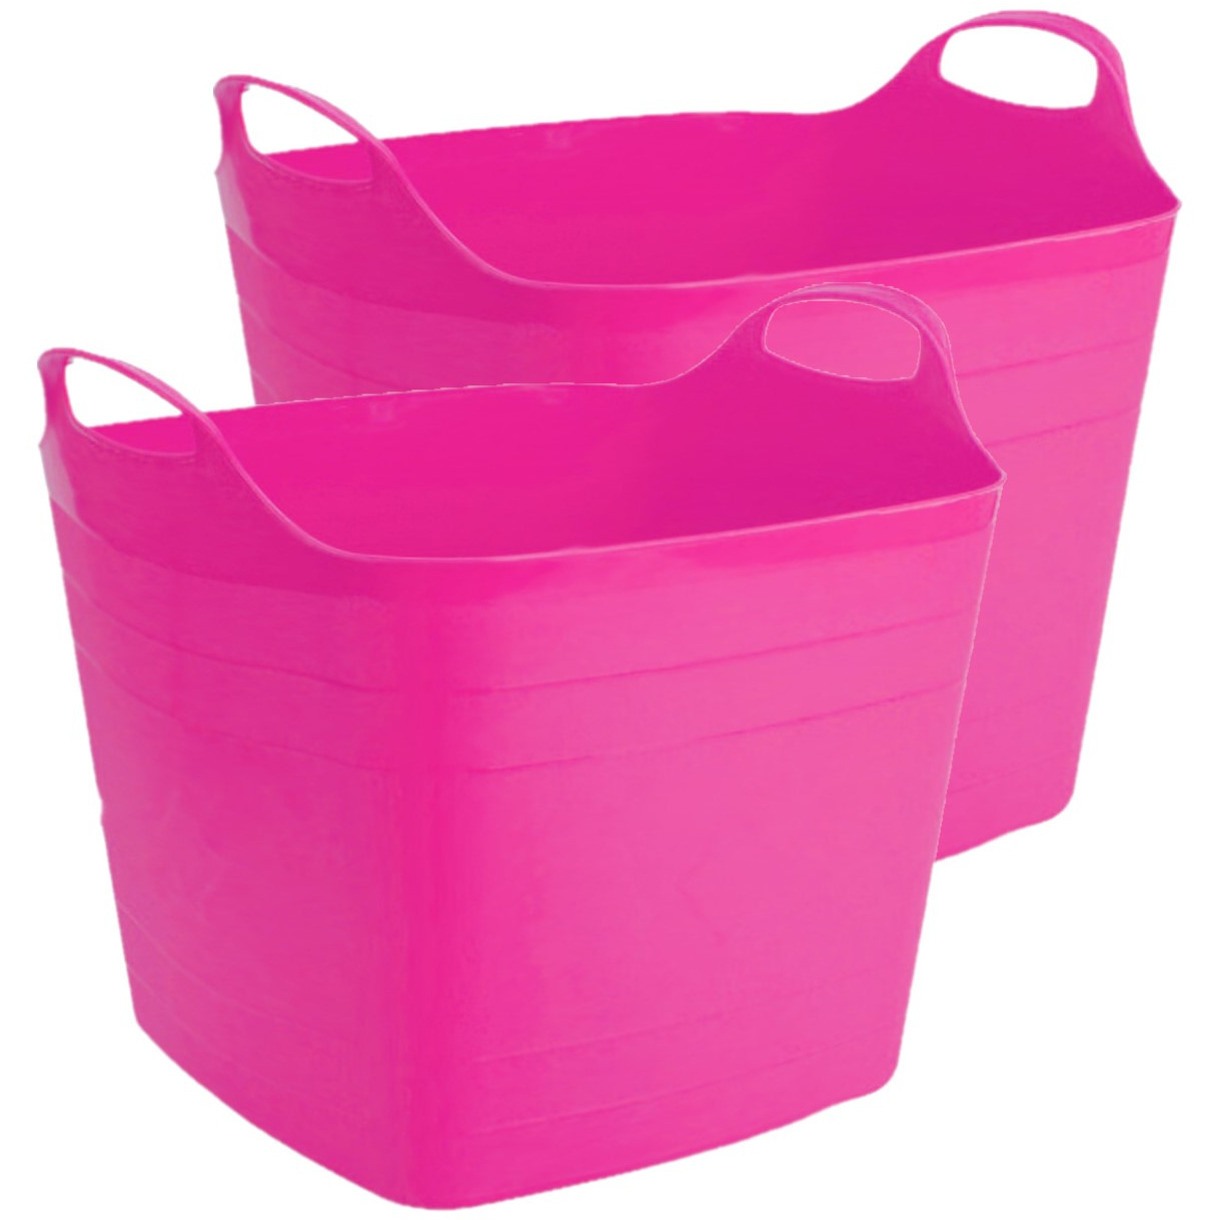 Merkloos 2x stuks flexibele kuip emmer/wasmand vierkant fuchsia roze liter -